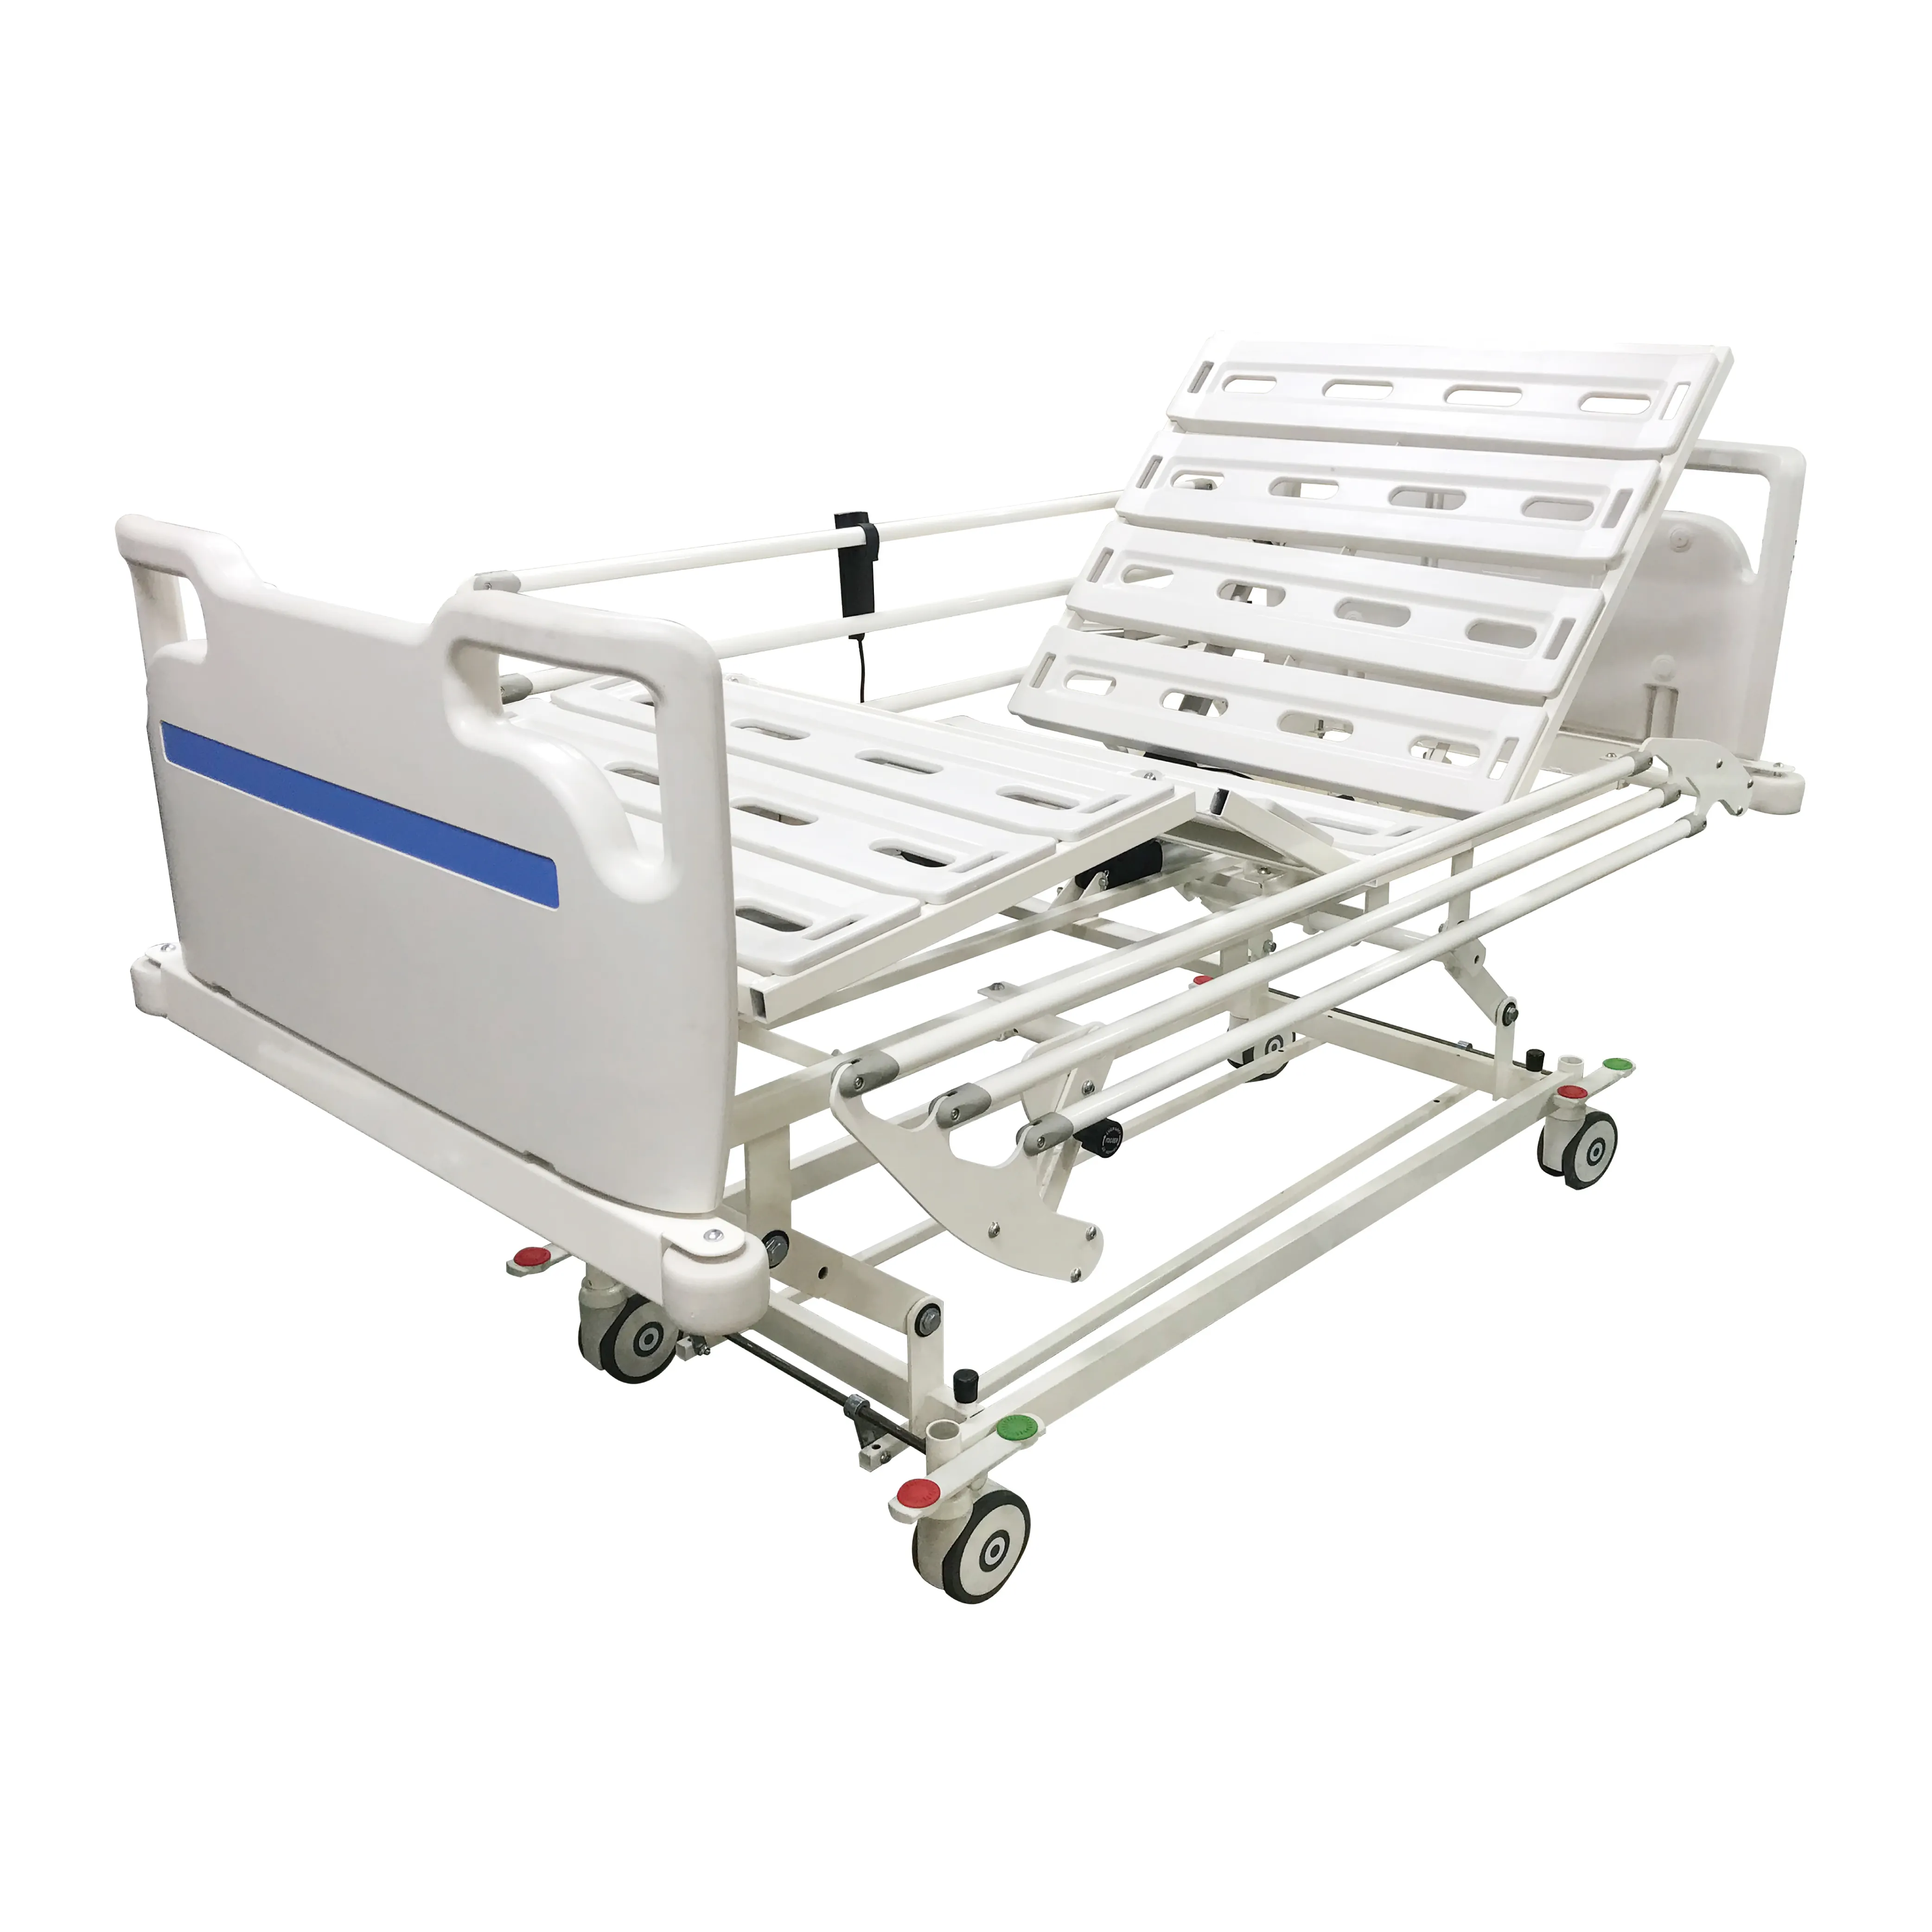 Mattress_ENB-301Eの3機能電気病院用ベッド